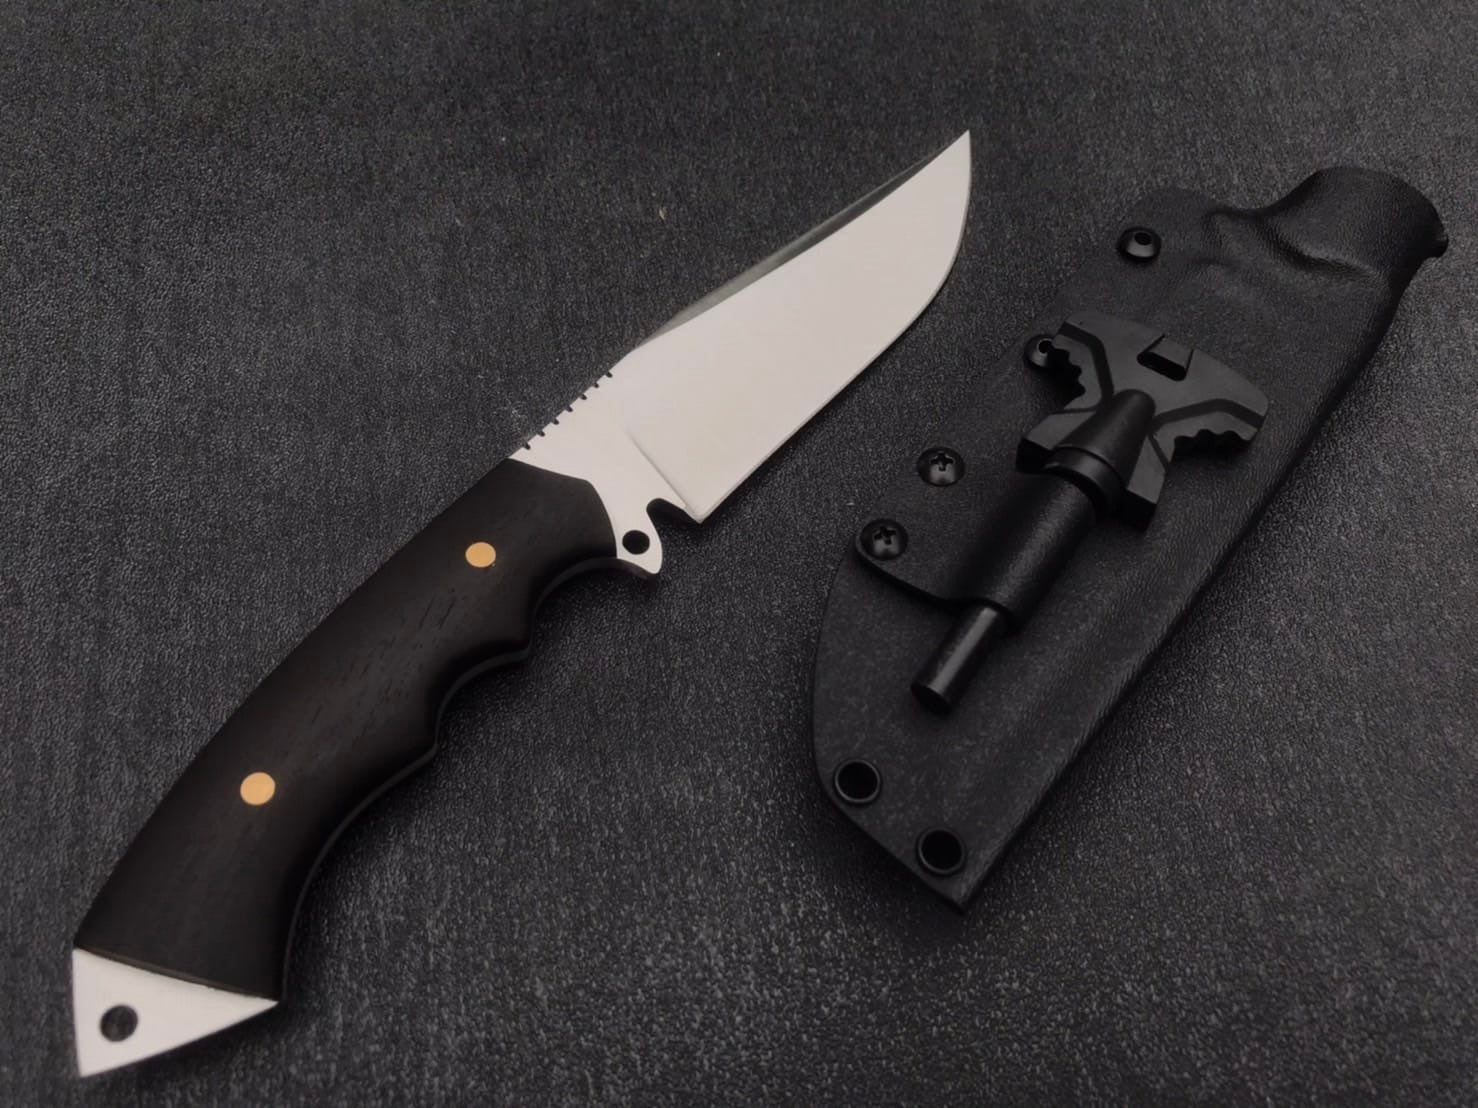 Hunting Knife, Custom Knife, Outdoor Knife, Engraved Knife, Tactical Knife,  Personalized Knife, Leather Sheath Professional Knife ferro Rod -  New  Zealand